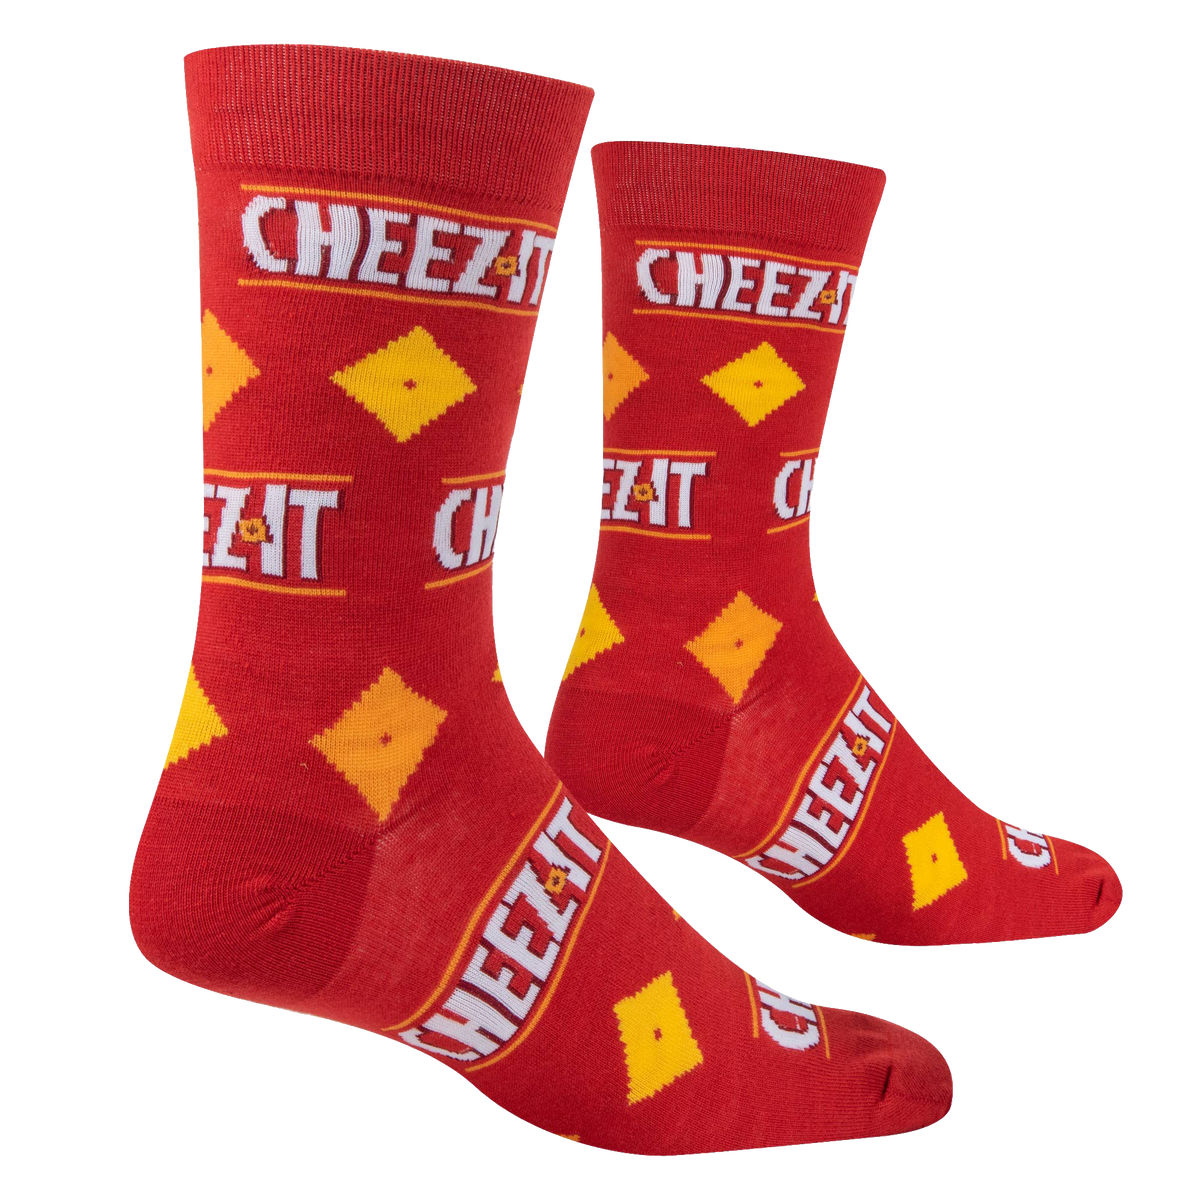 Cheez It Socks